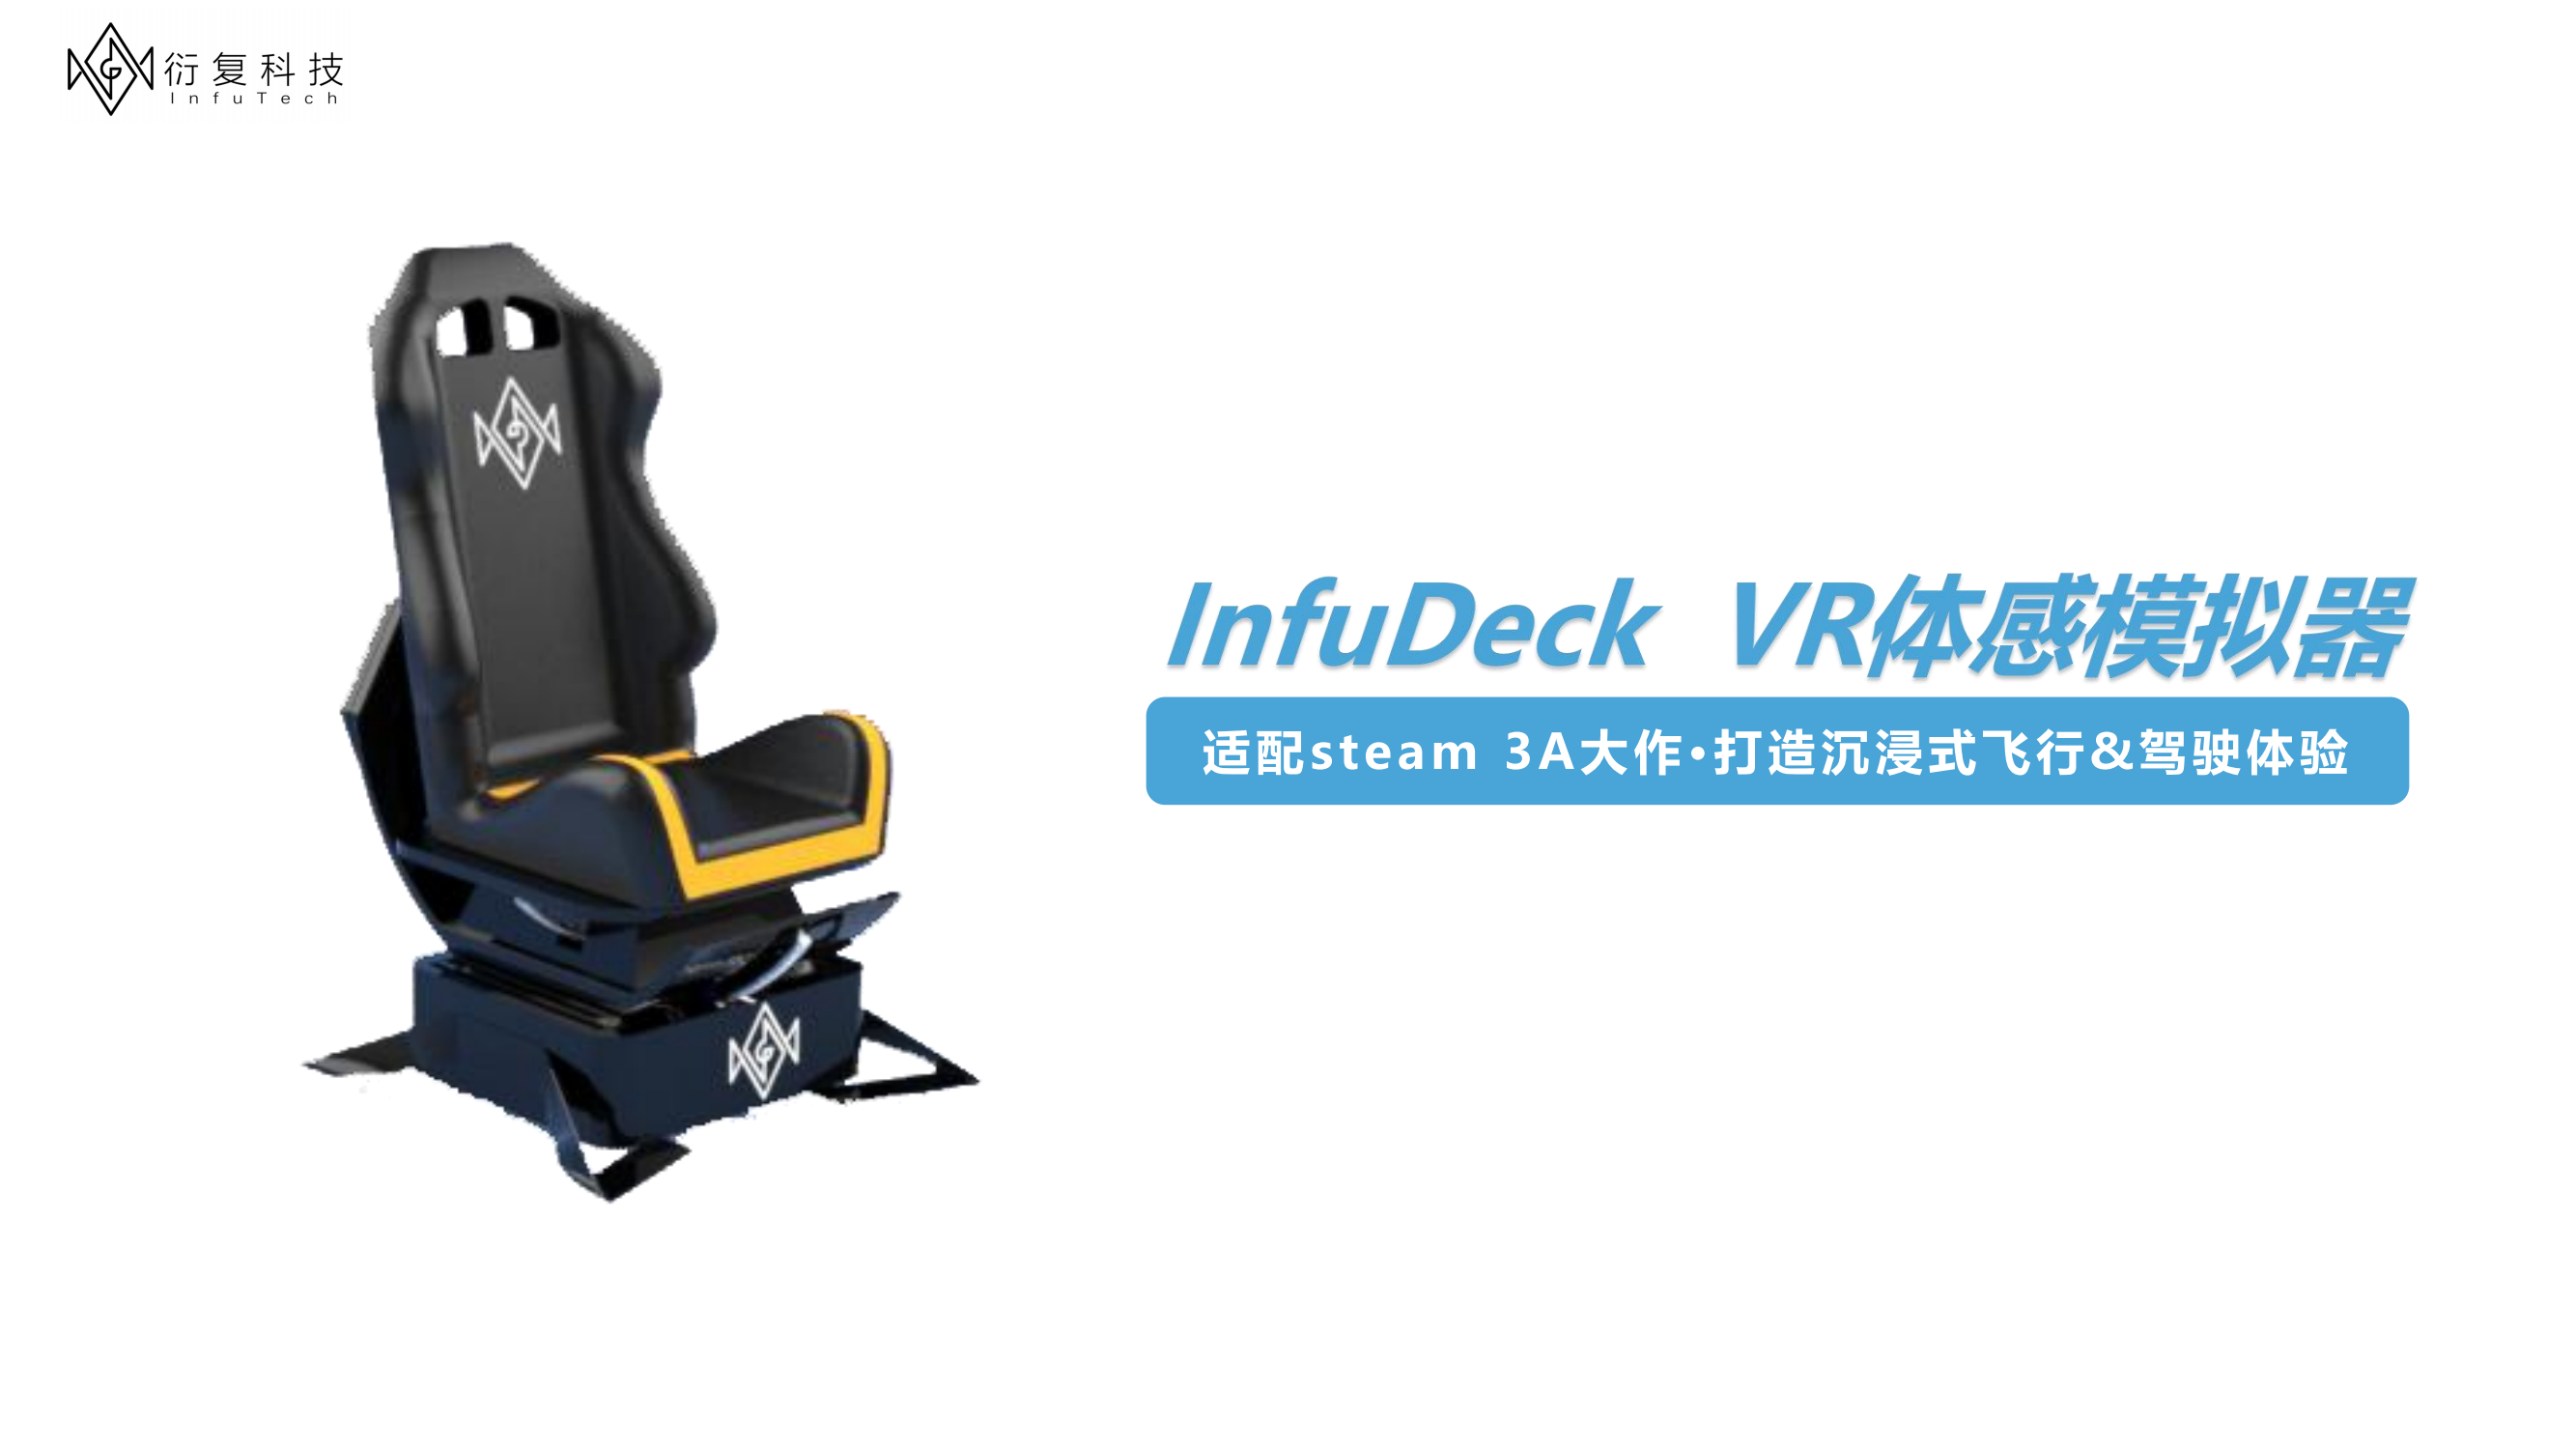 InfuDeck VR体感模拟器宣传资料_00.png